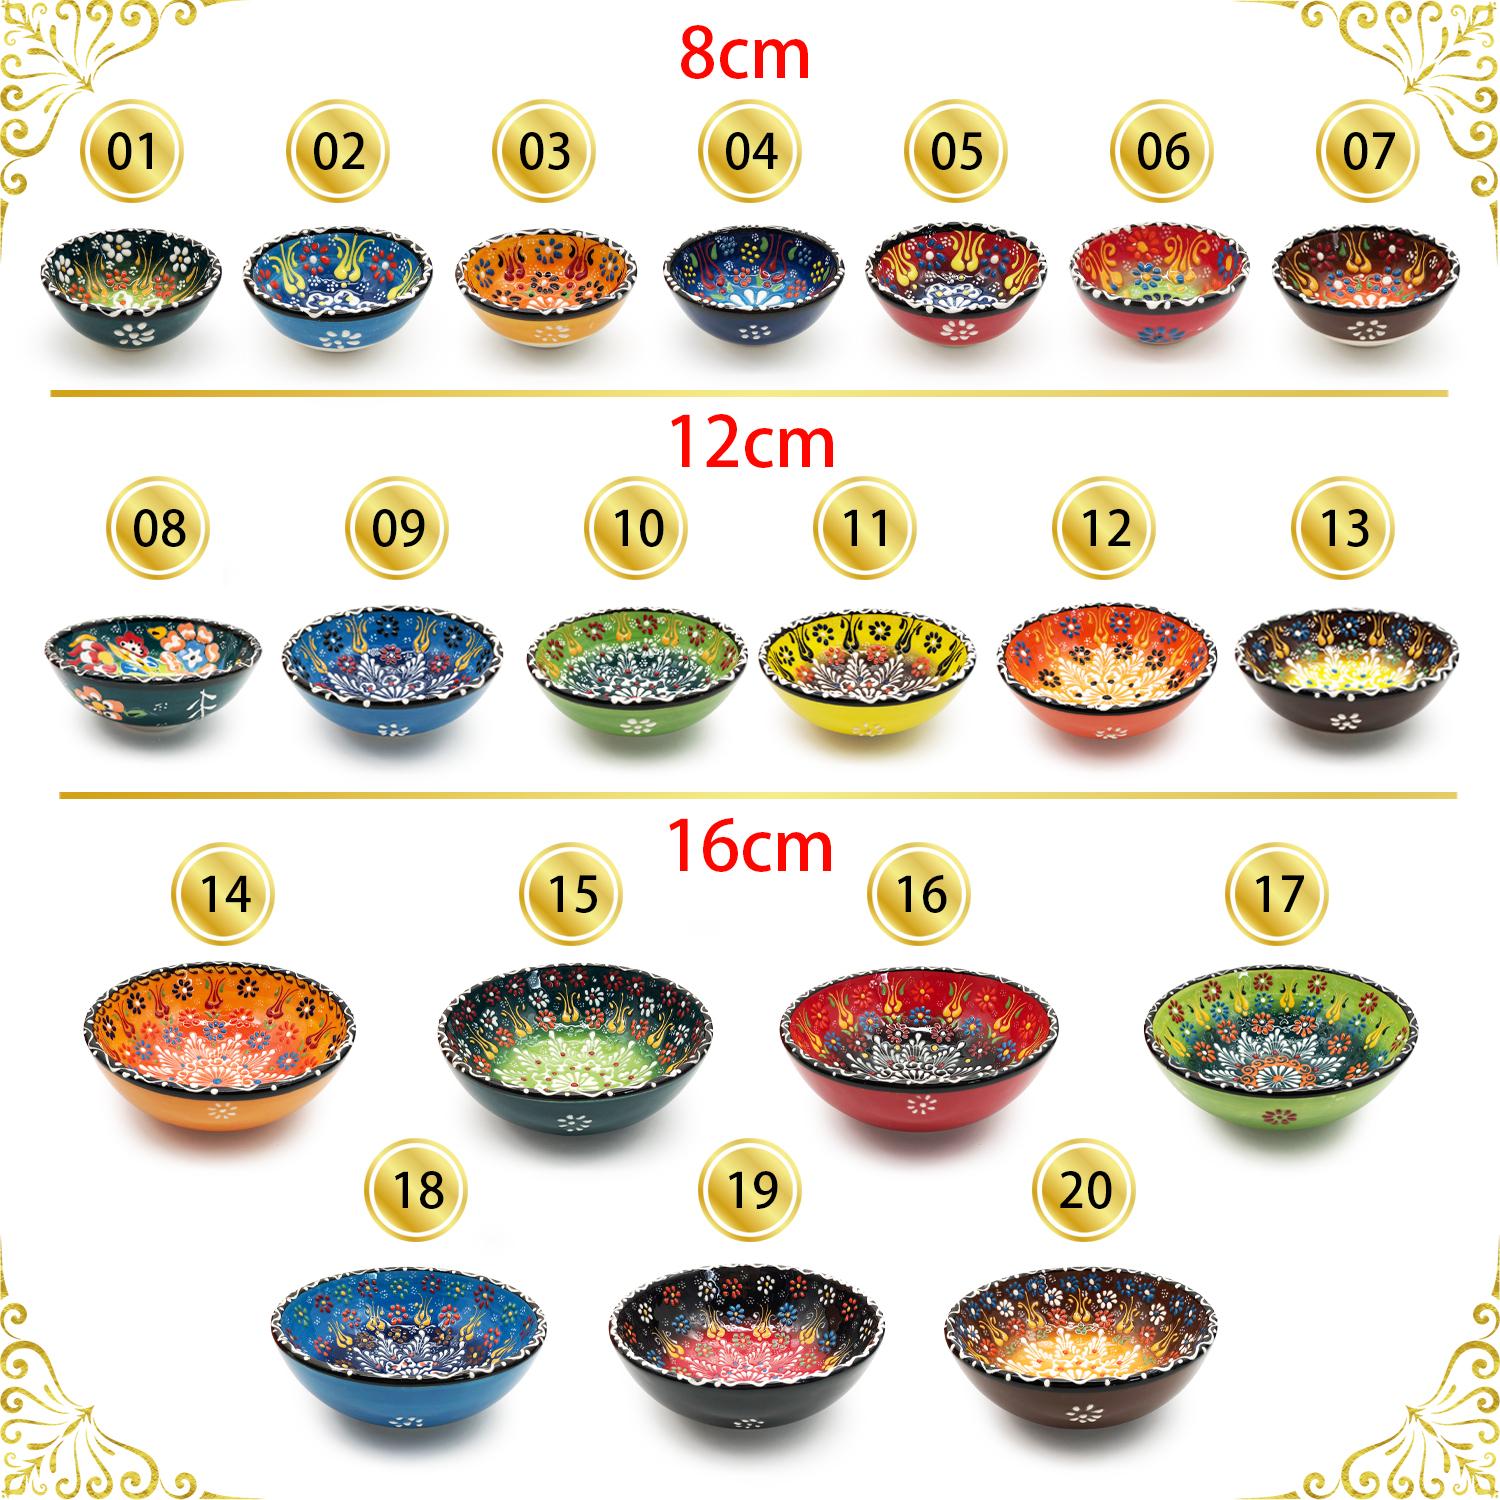 80MM手繪土耳其傳統工藝陶瓷碗， 土耳其餐具奧斯曼帝國浮雕圖案土耳其藝術時尚潮物(VTR-CERAMIC-BOWL-80MM-30005)